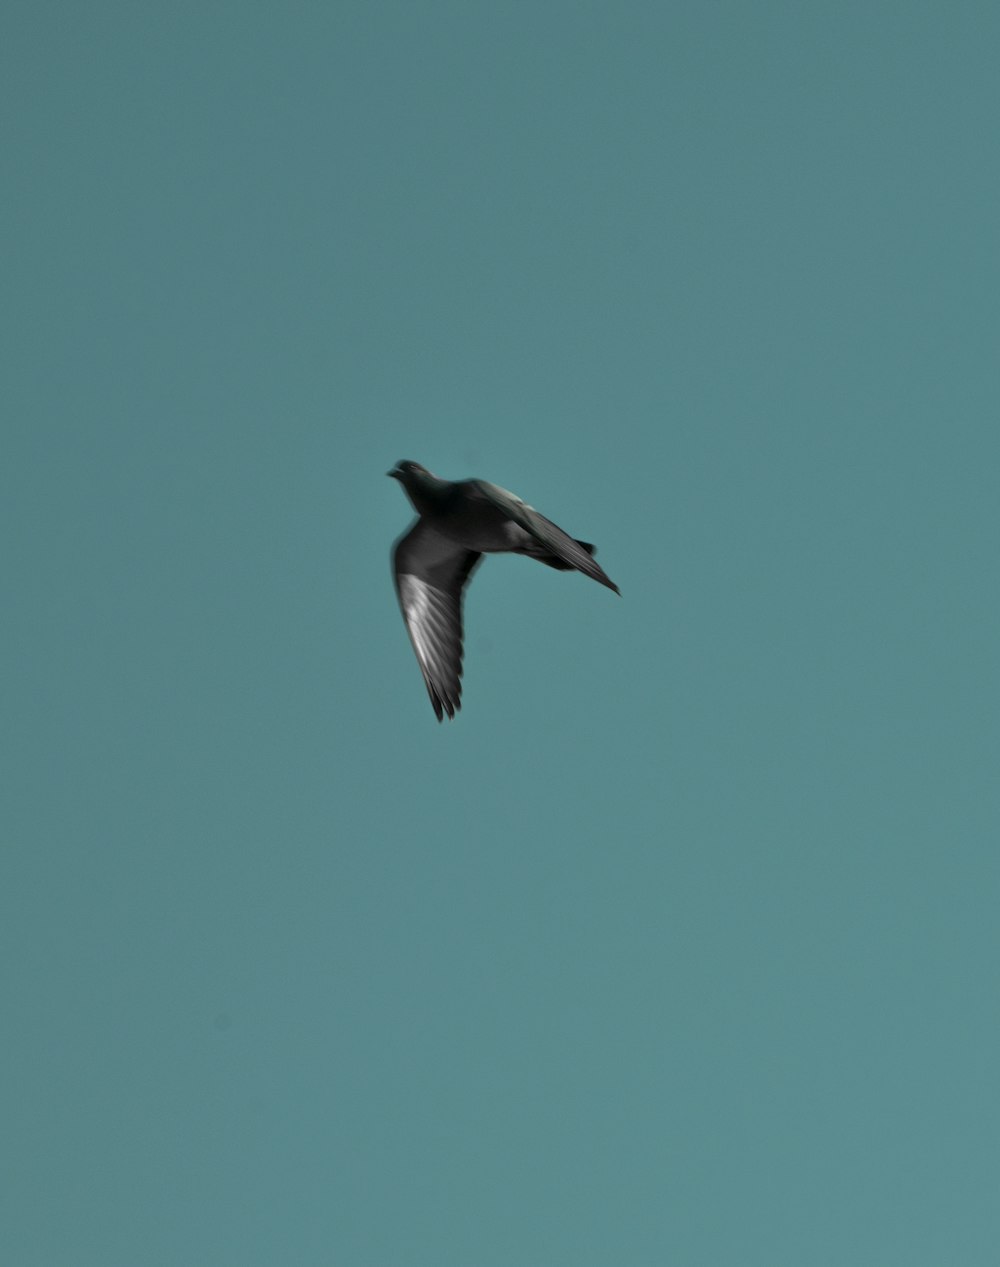 a black and white bird flying through a blue sky